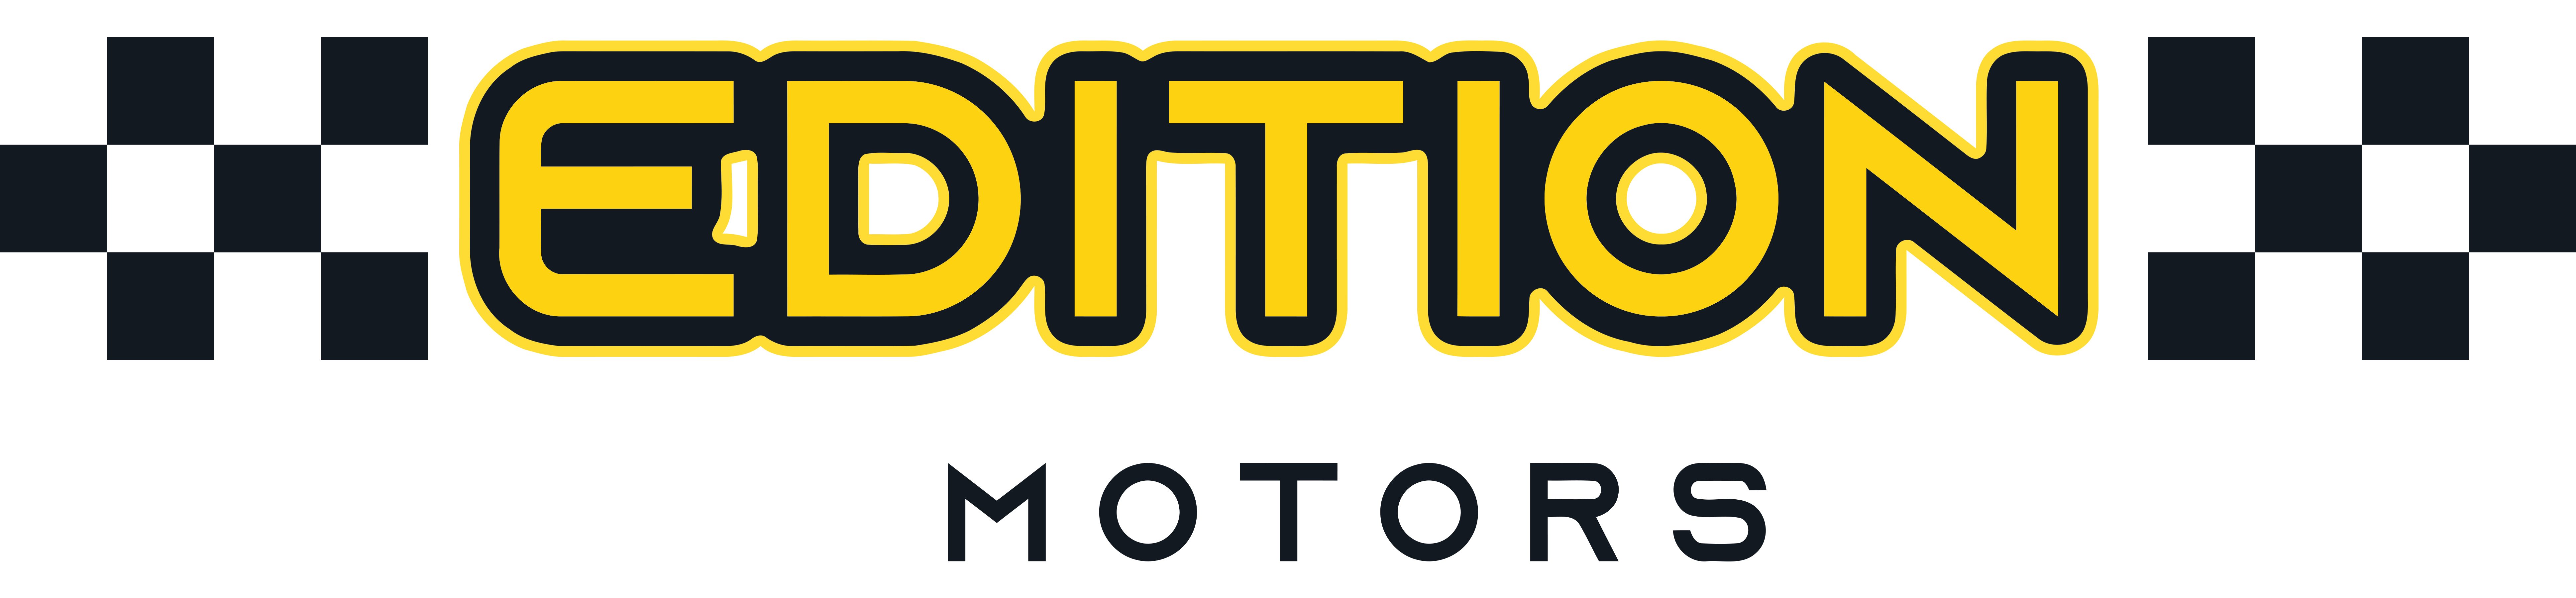 Edition Motors